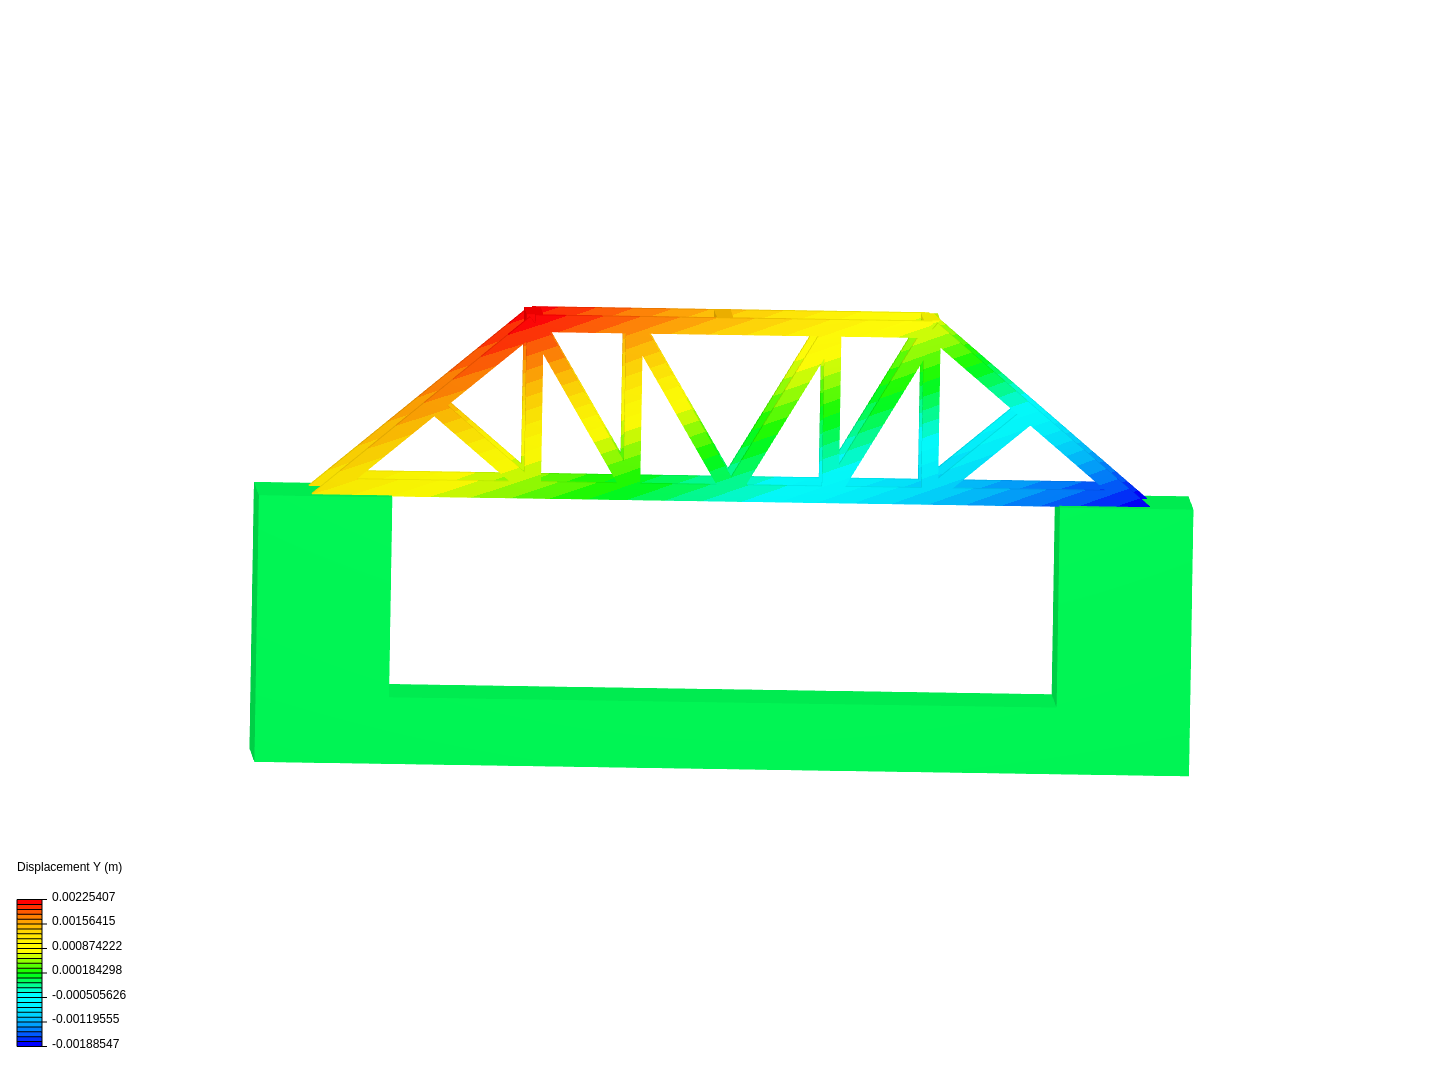 Bridge2 image